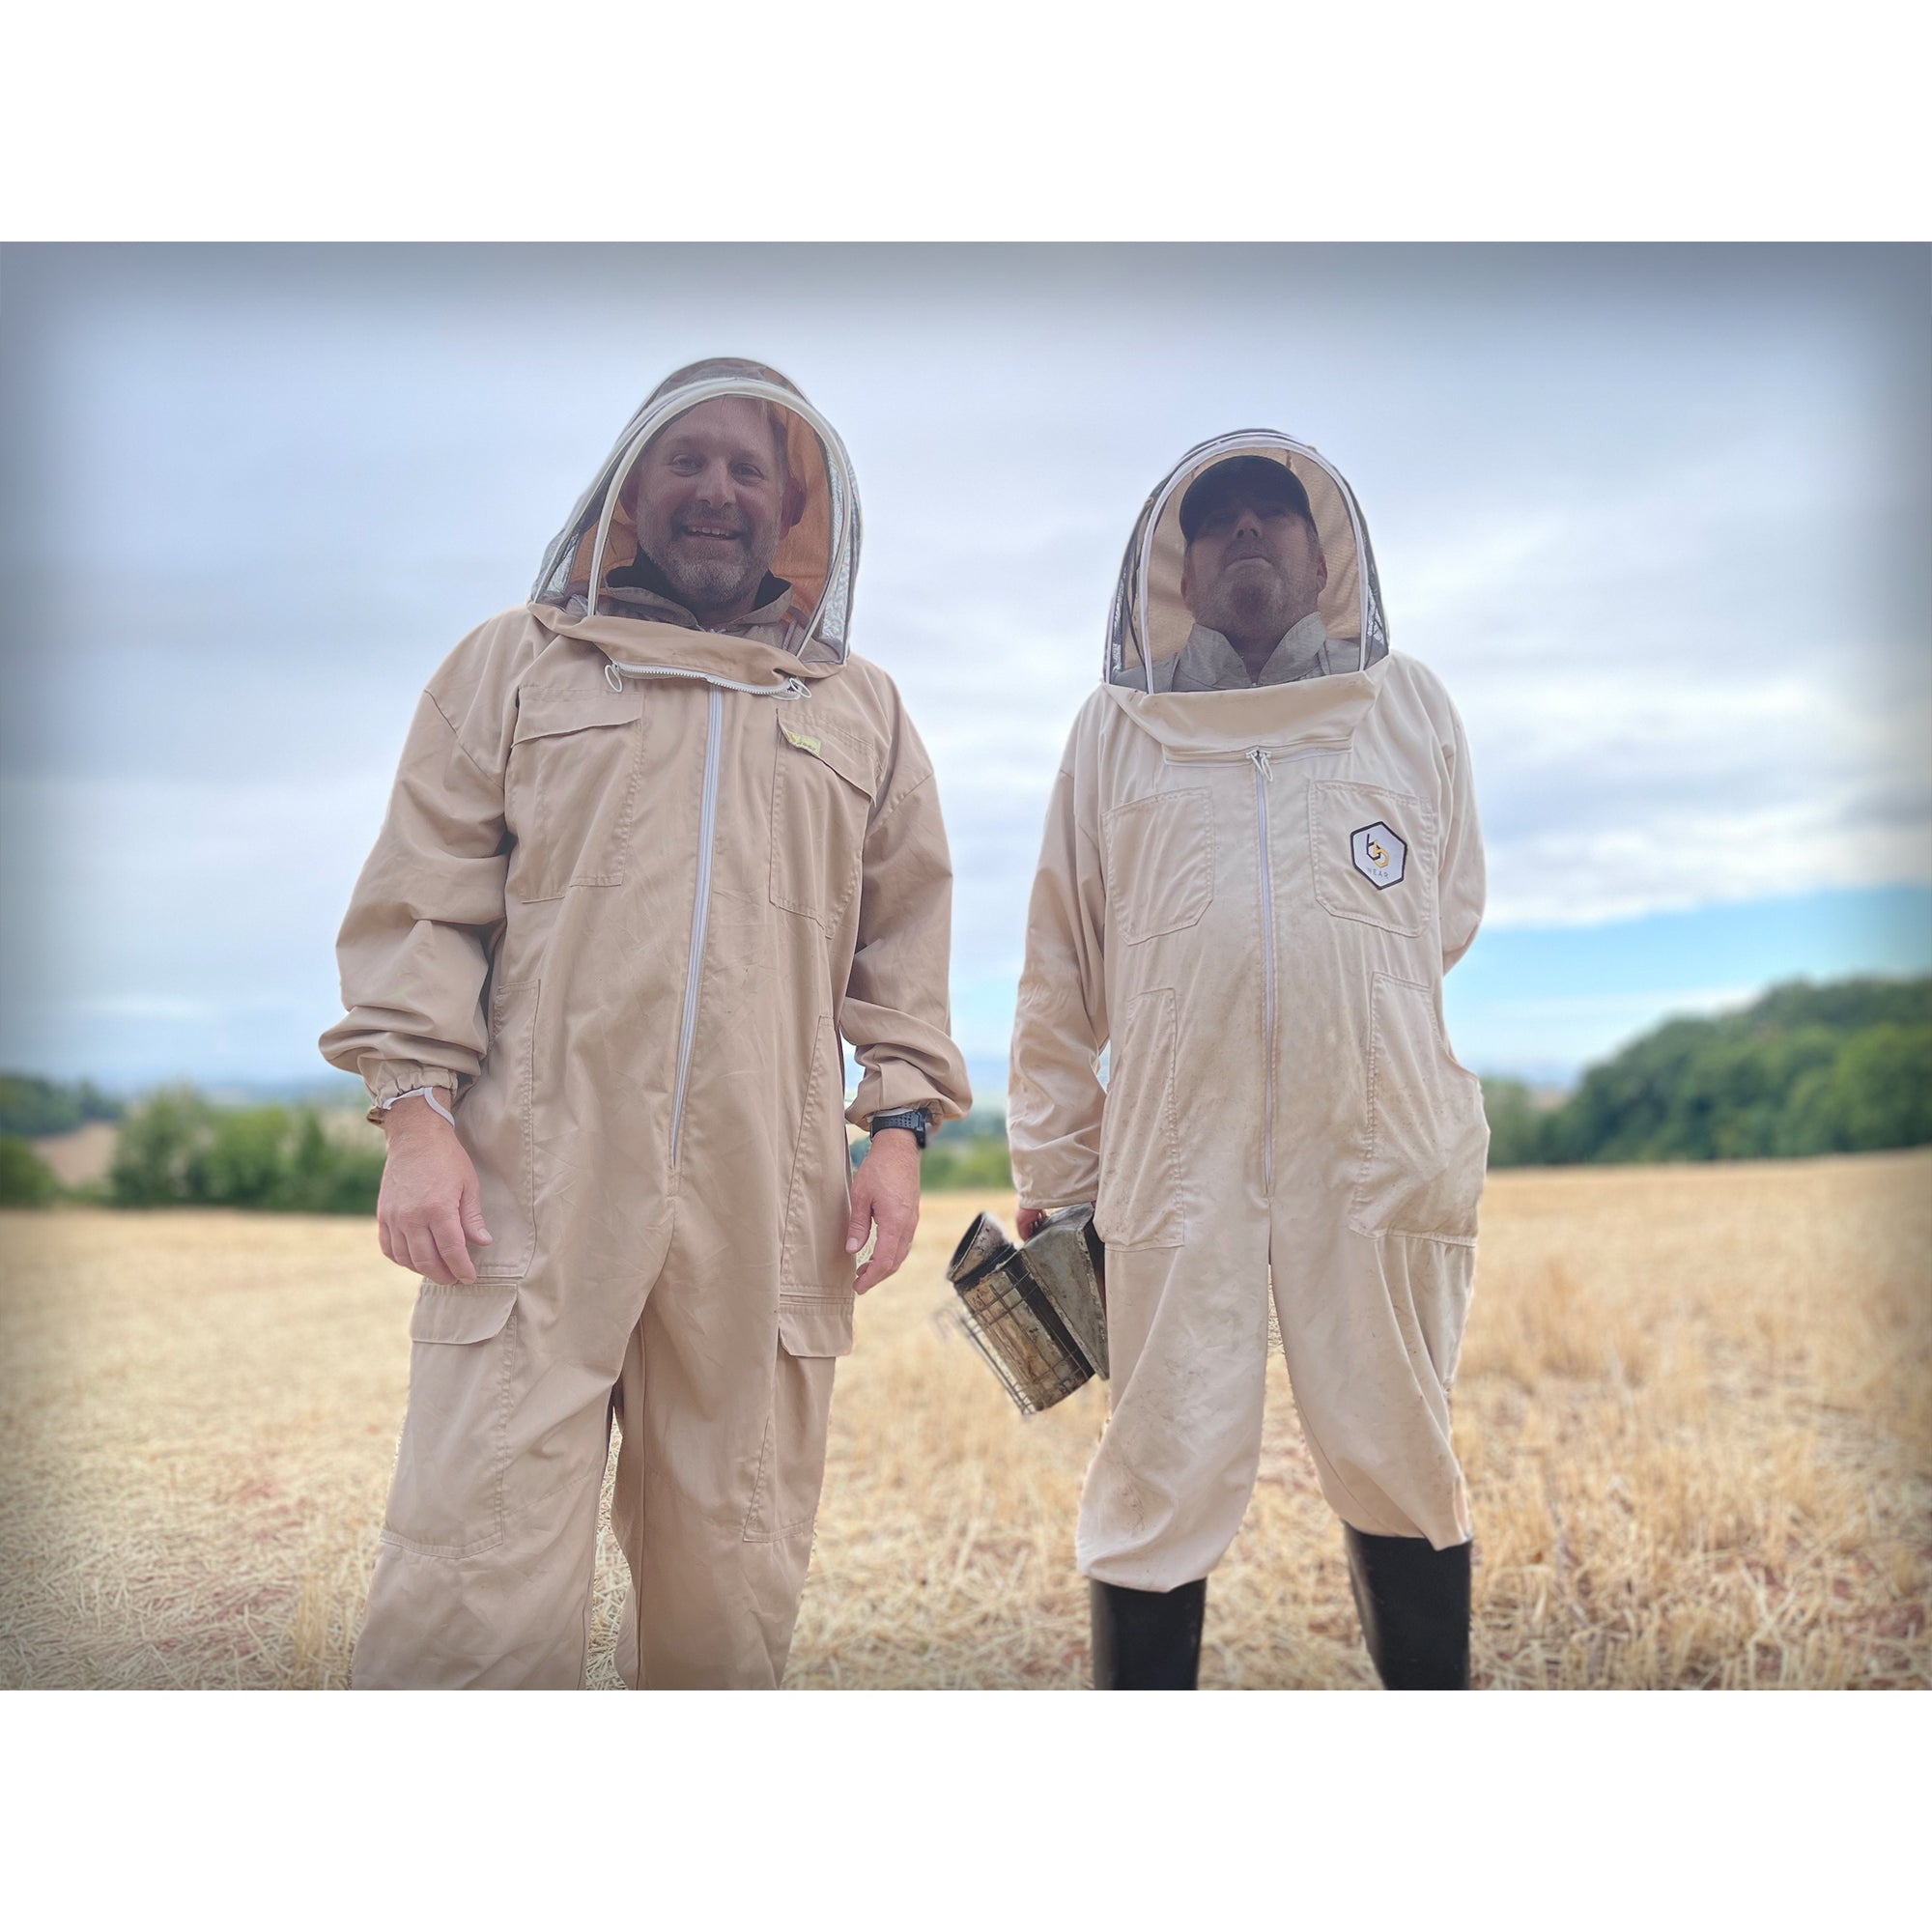 Simon & Neil The beekeeper